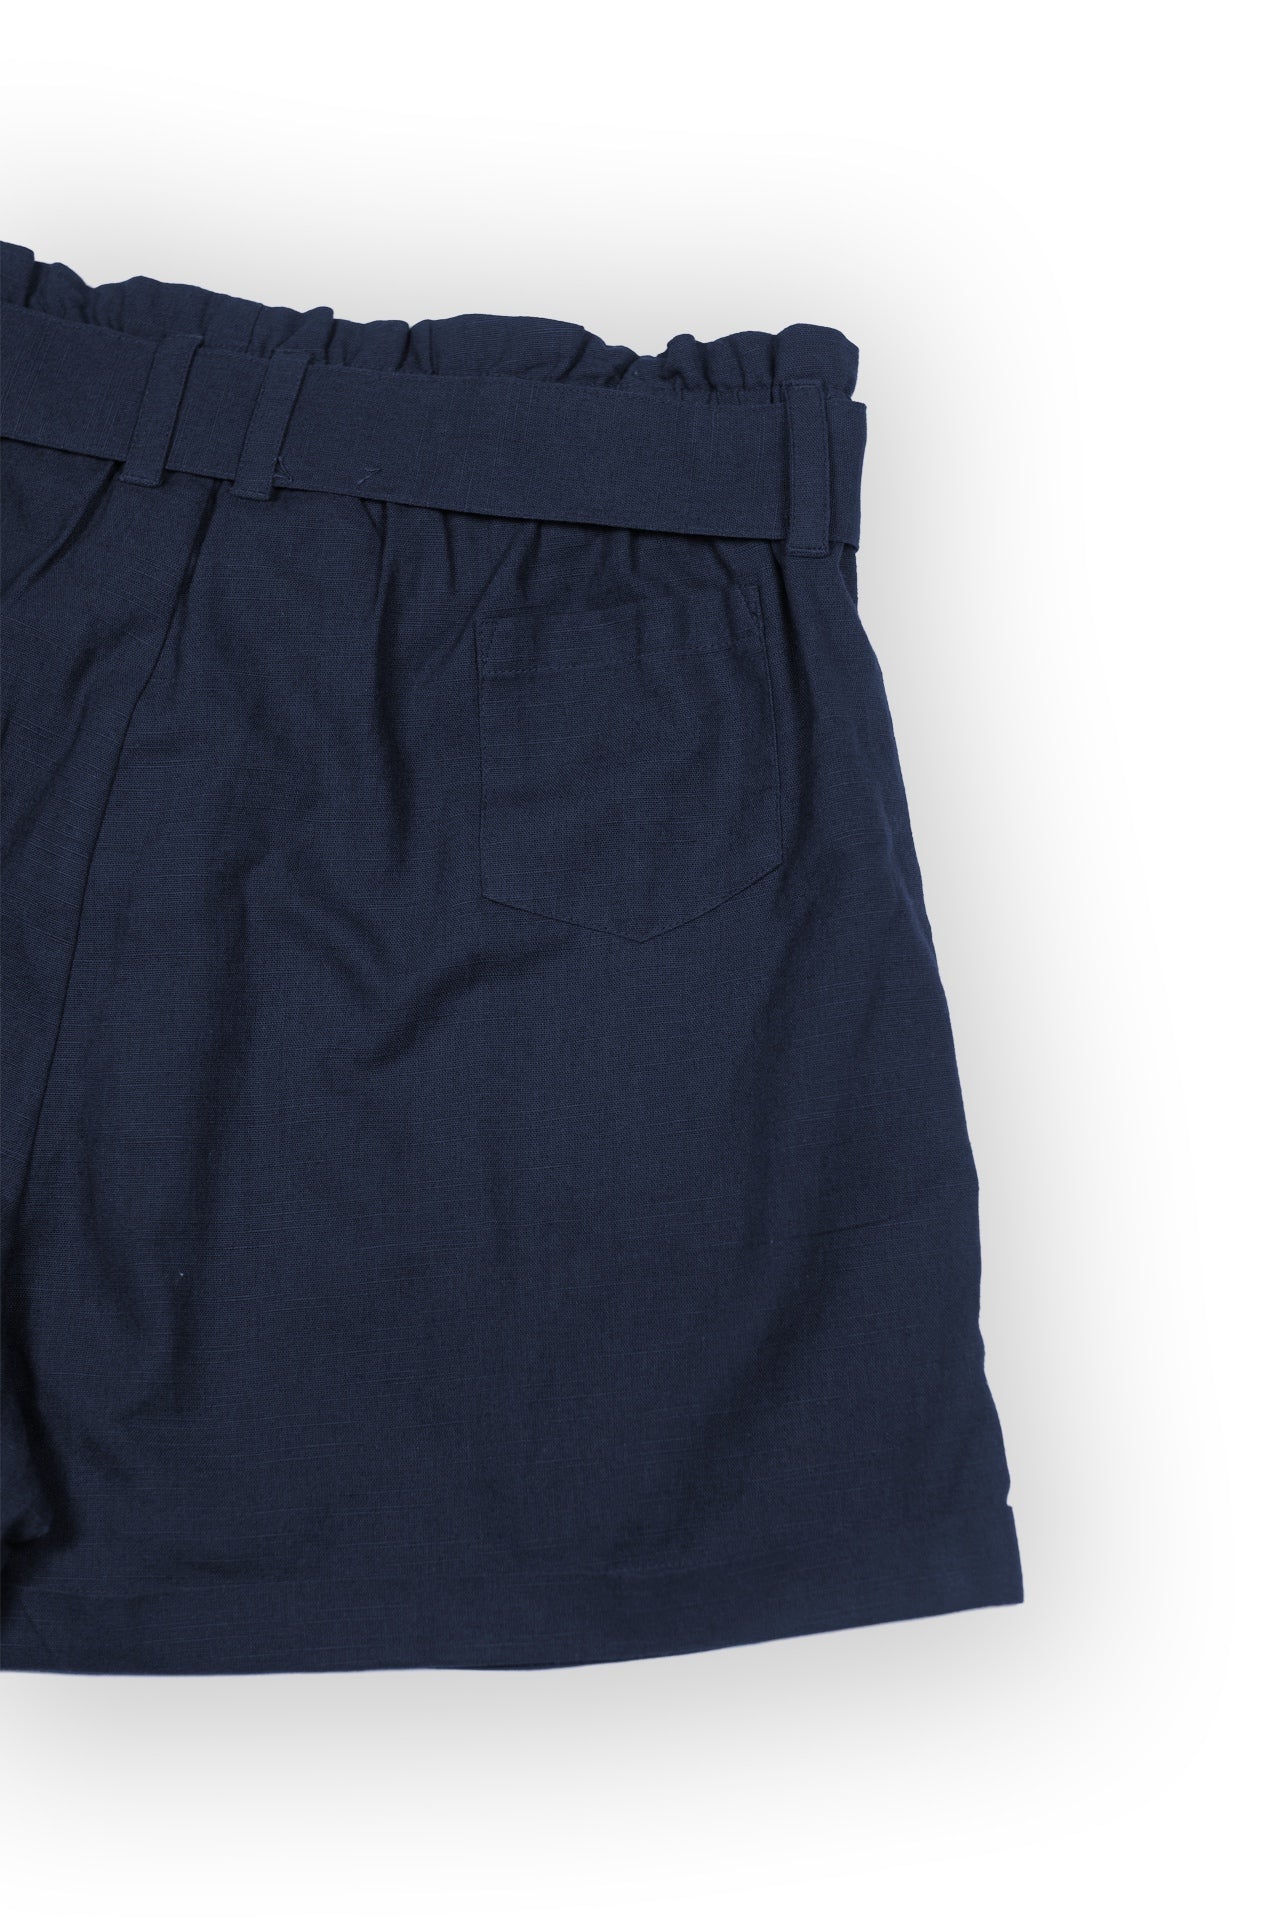 Mabel Navy Paperbag Waist Shorts - Rupert and Buckley - Shorts